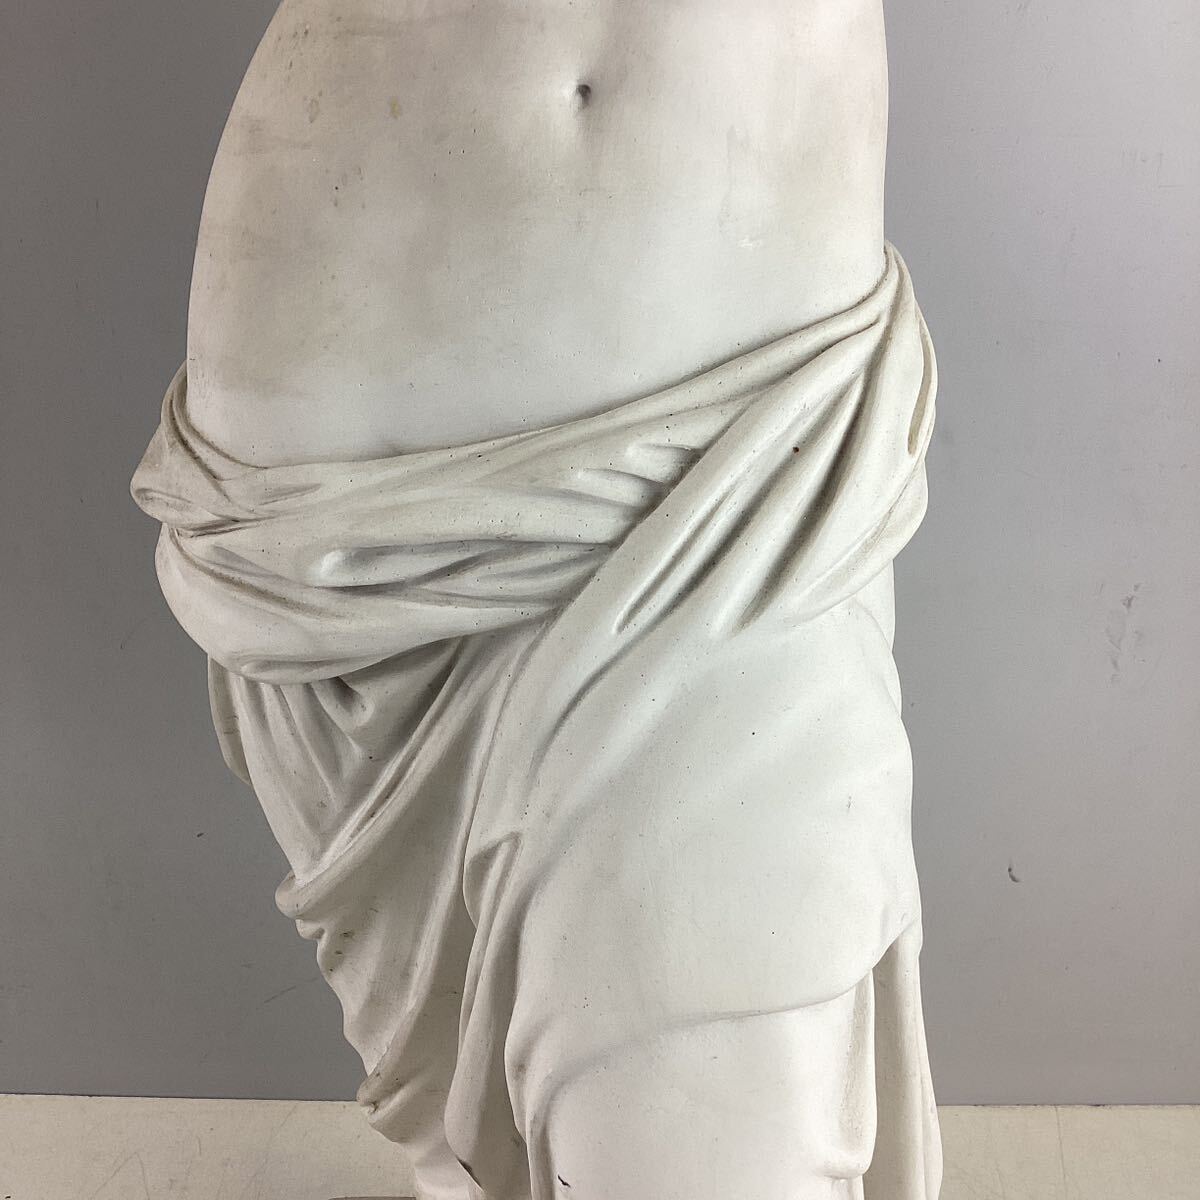 o333 ミロのヴィーナス像 ヴィーナス 女神像 西洋彫刻 洋風 高さ約85cm 重量30kg 置物 美術 オブジェクト ガーデニング インテリア 中古品_画像3